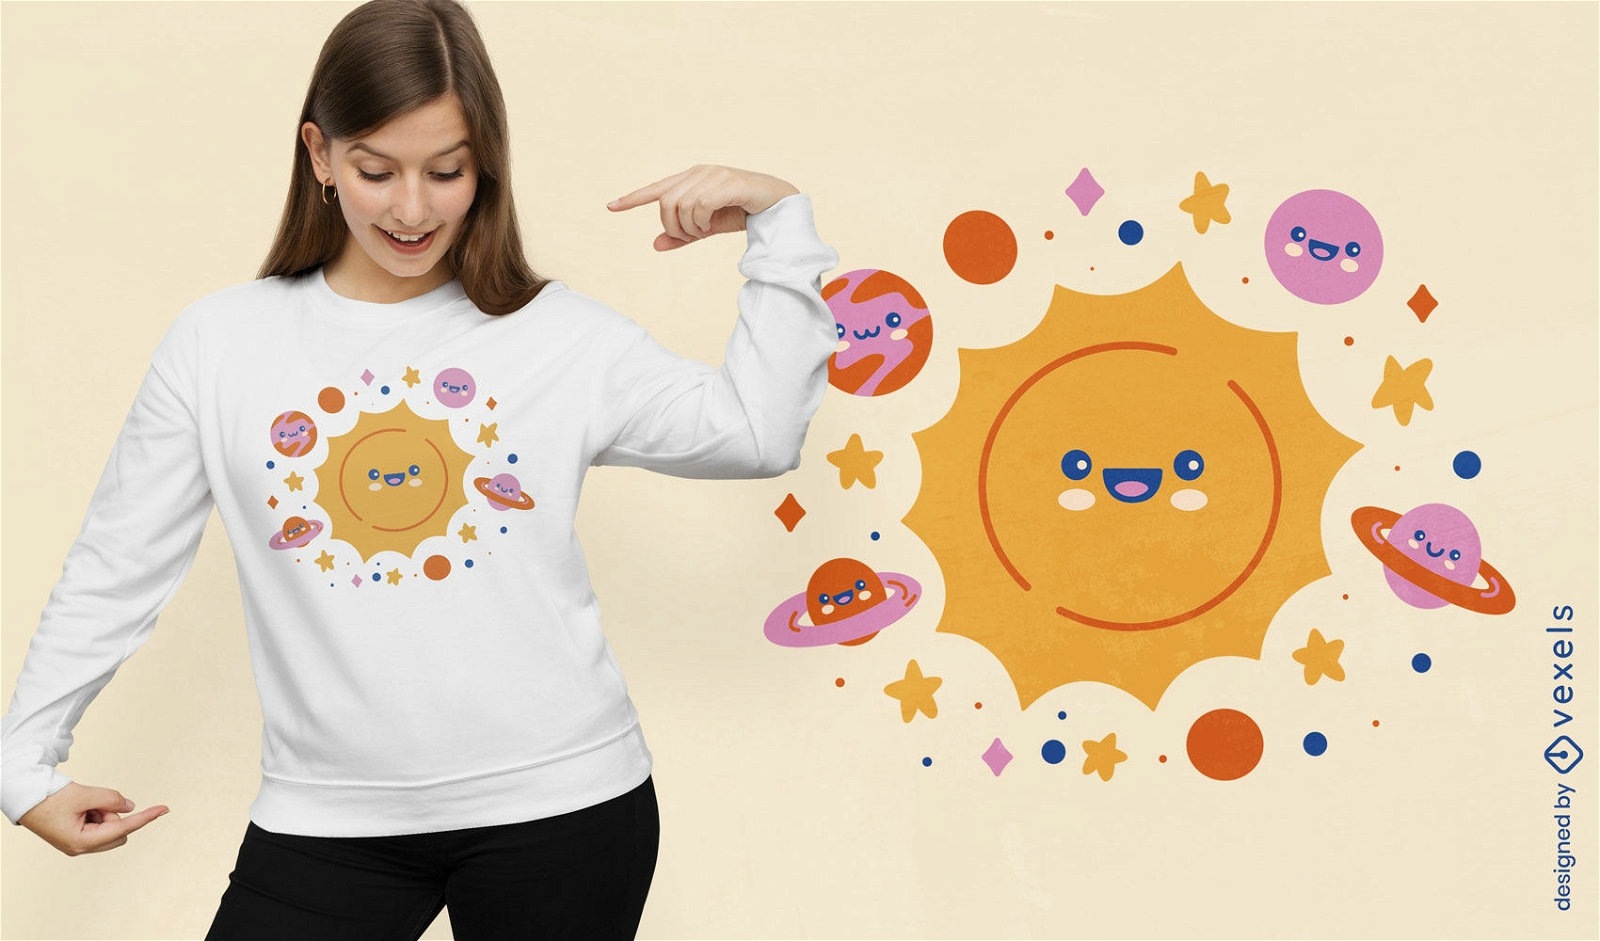 Solar System cute style t-shirt design